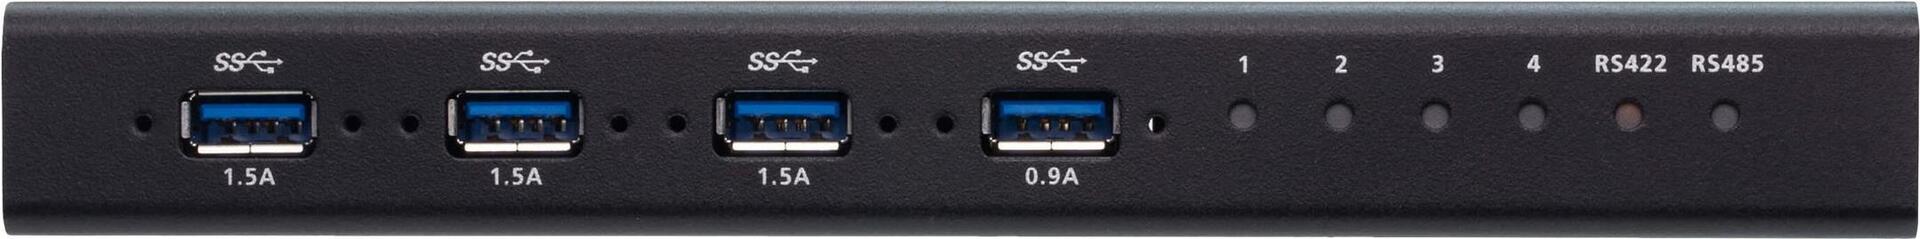 ATEN 4 x 4 USB 3.2 Gen 1 Industrie Hub Switch (US334I-AT)